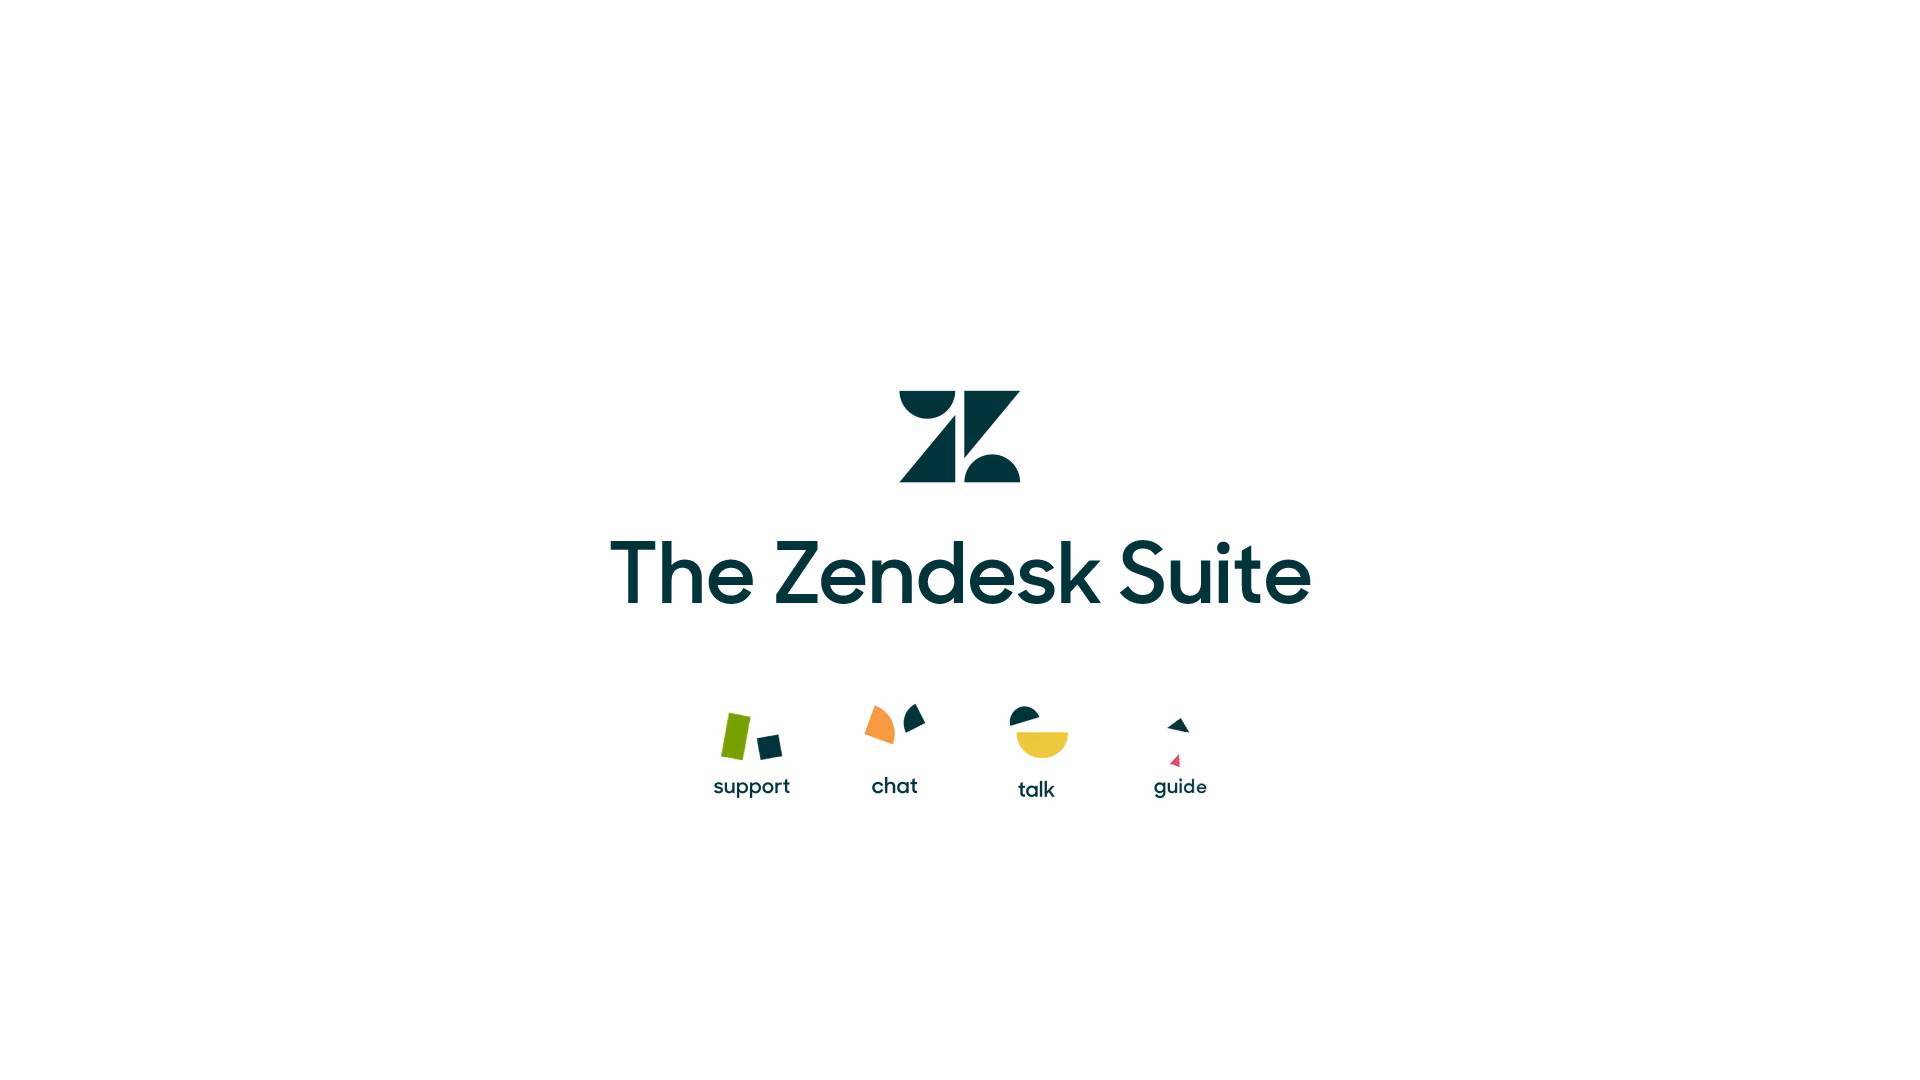 Help Service Logo - Zendesk. Customer Service Software & Support Ticket System